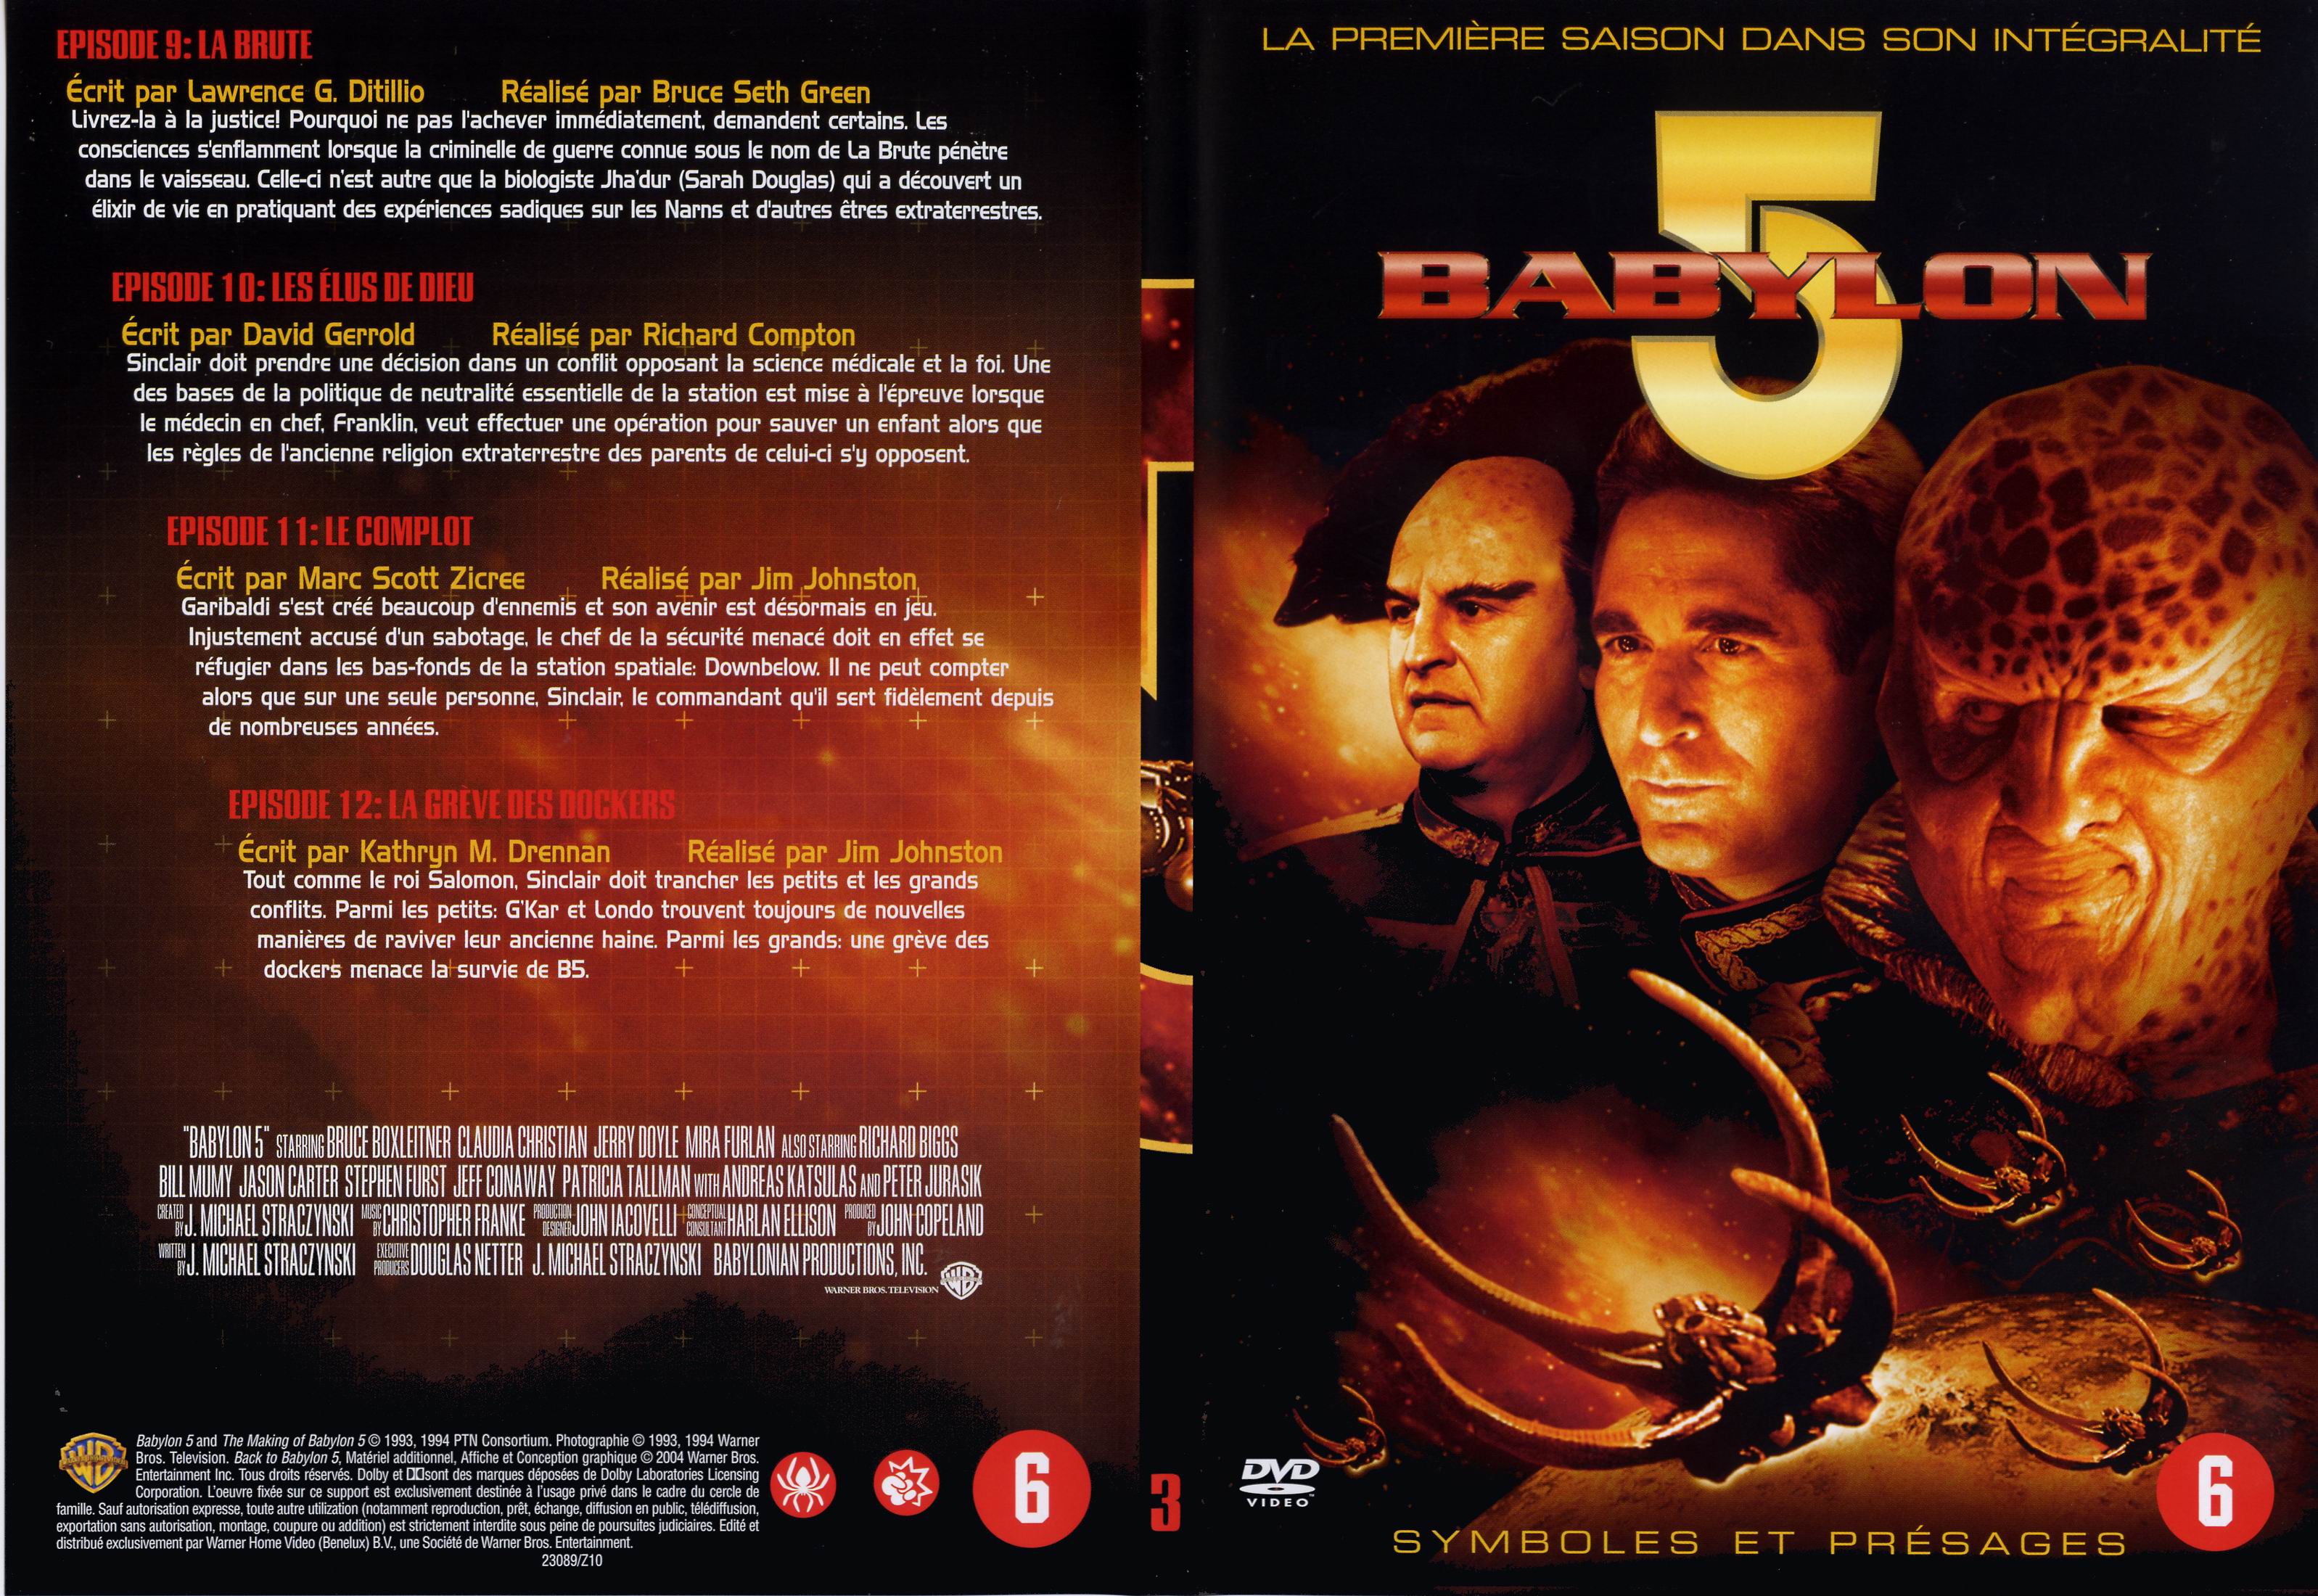 Jaquette DVD Babylon 5 saison 1 dvd 3